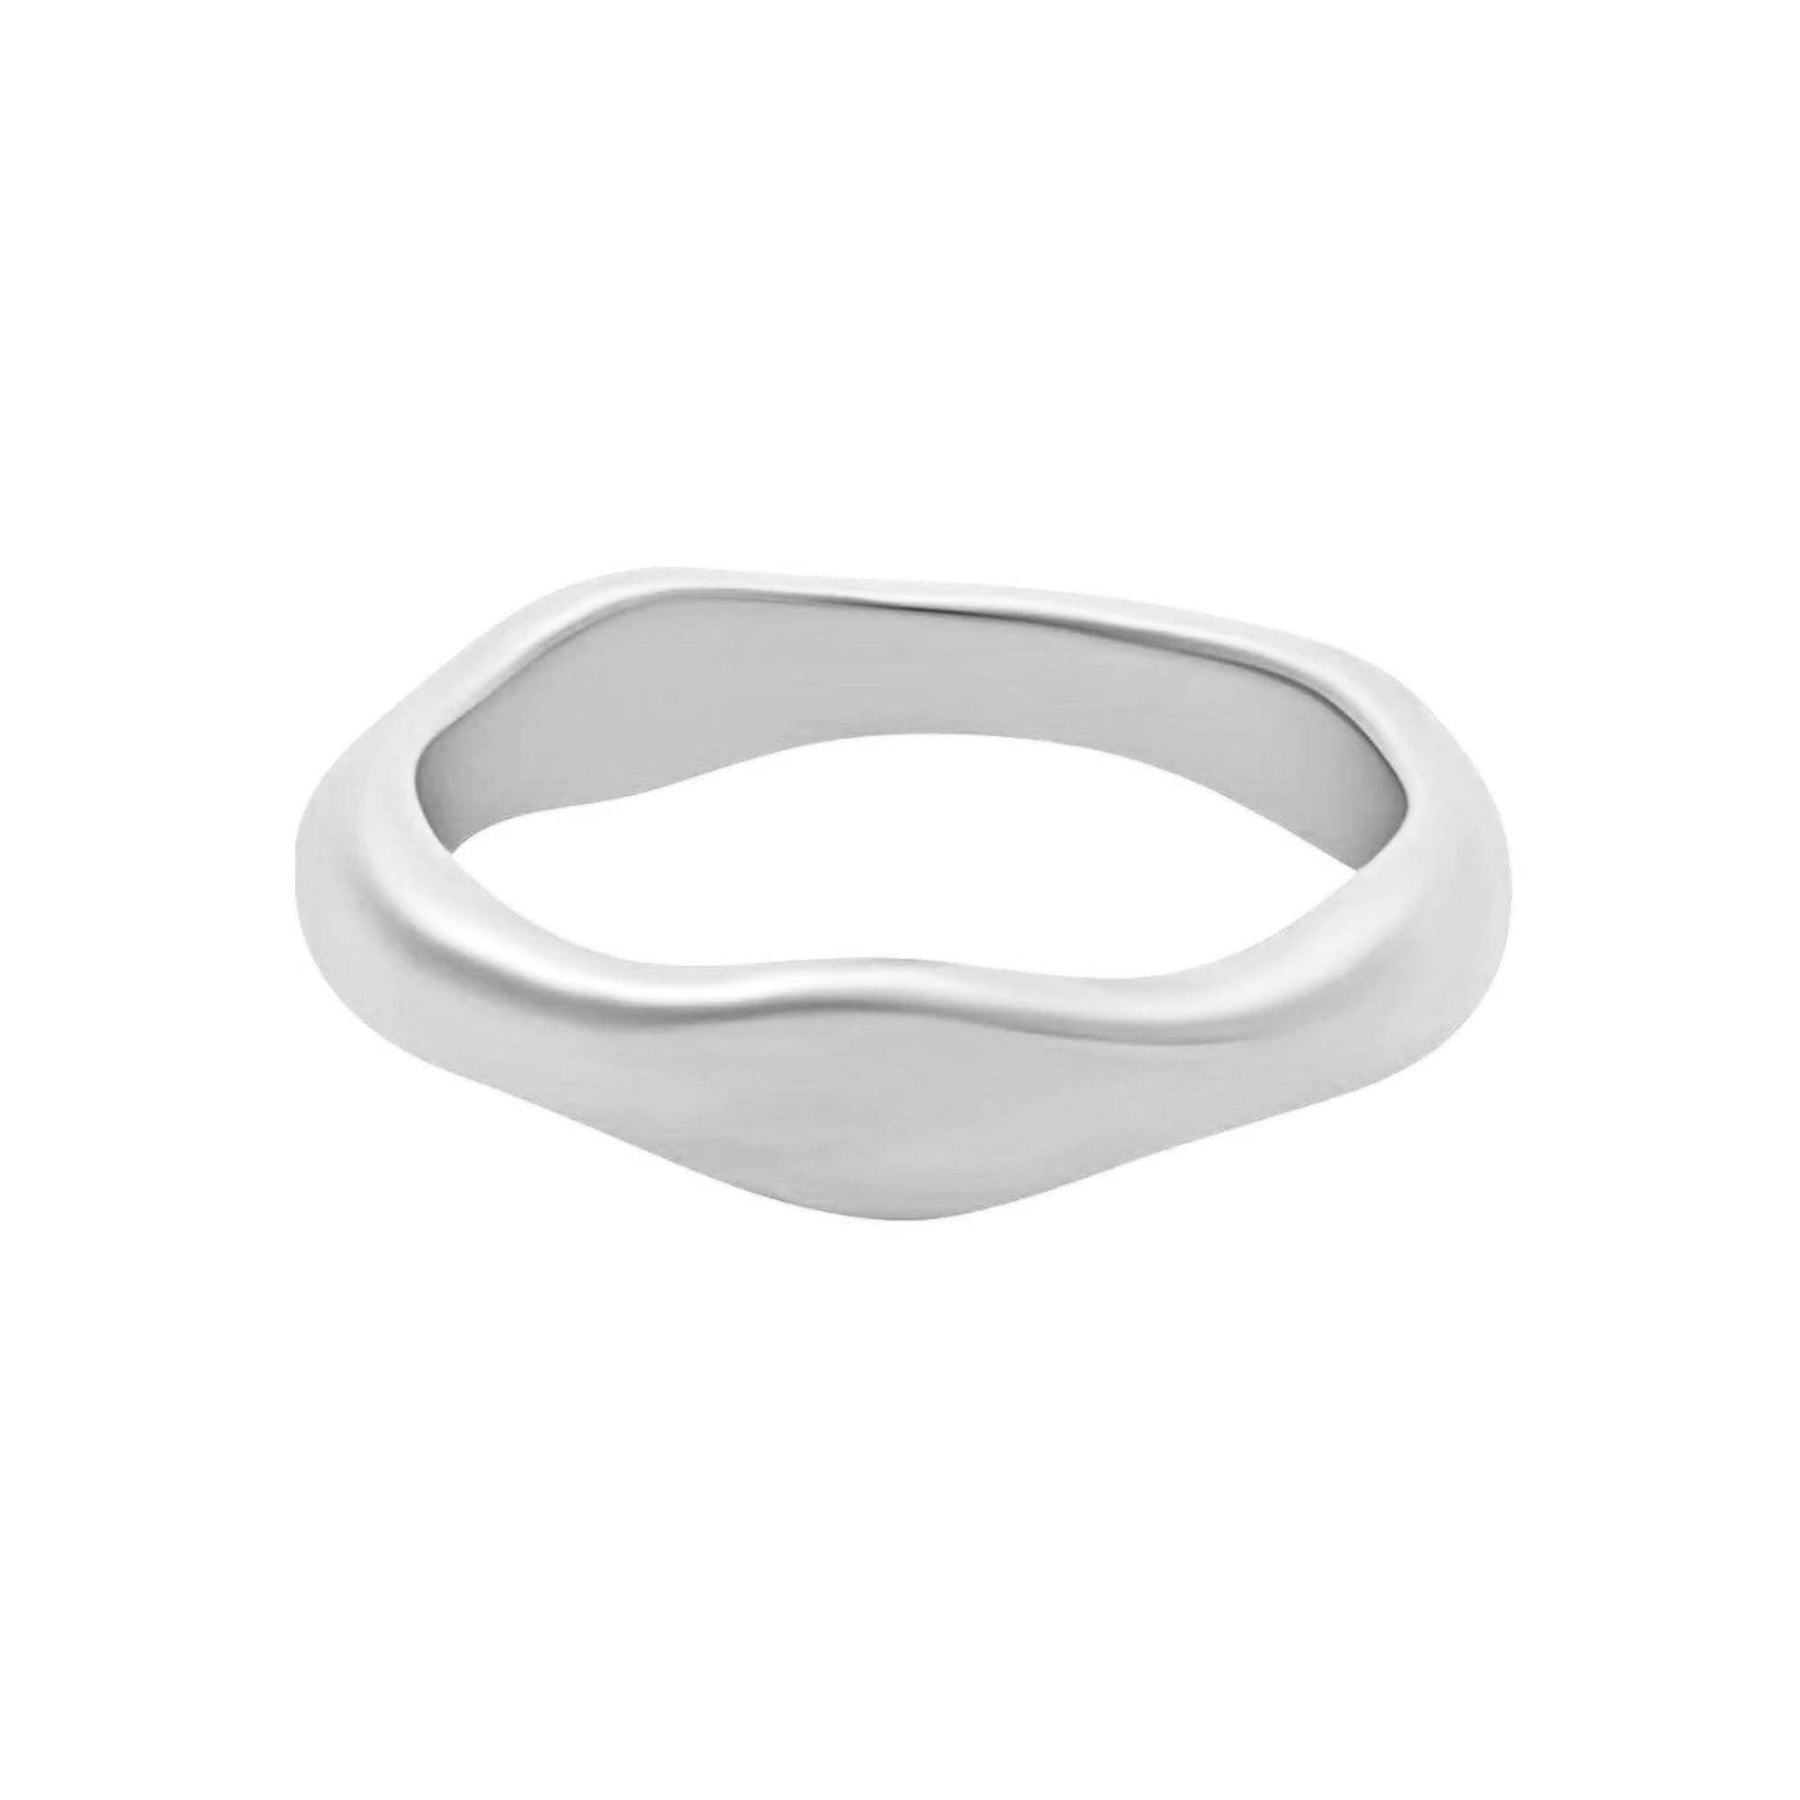 BohoMoon Stainless Steel Aliah Ring Silver / US 4 / UK H / EUR 46 / (xxsmall)